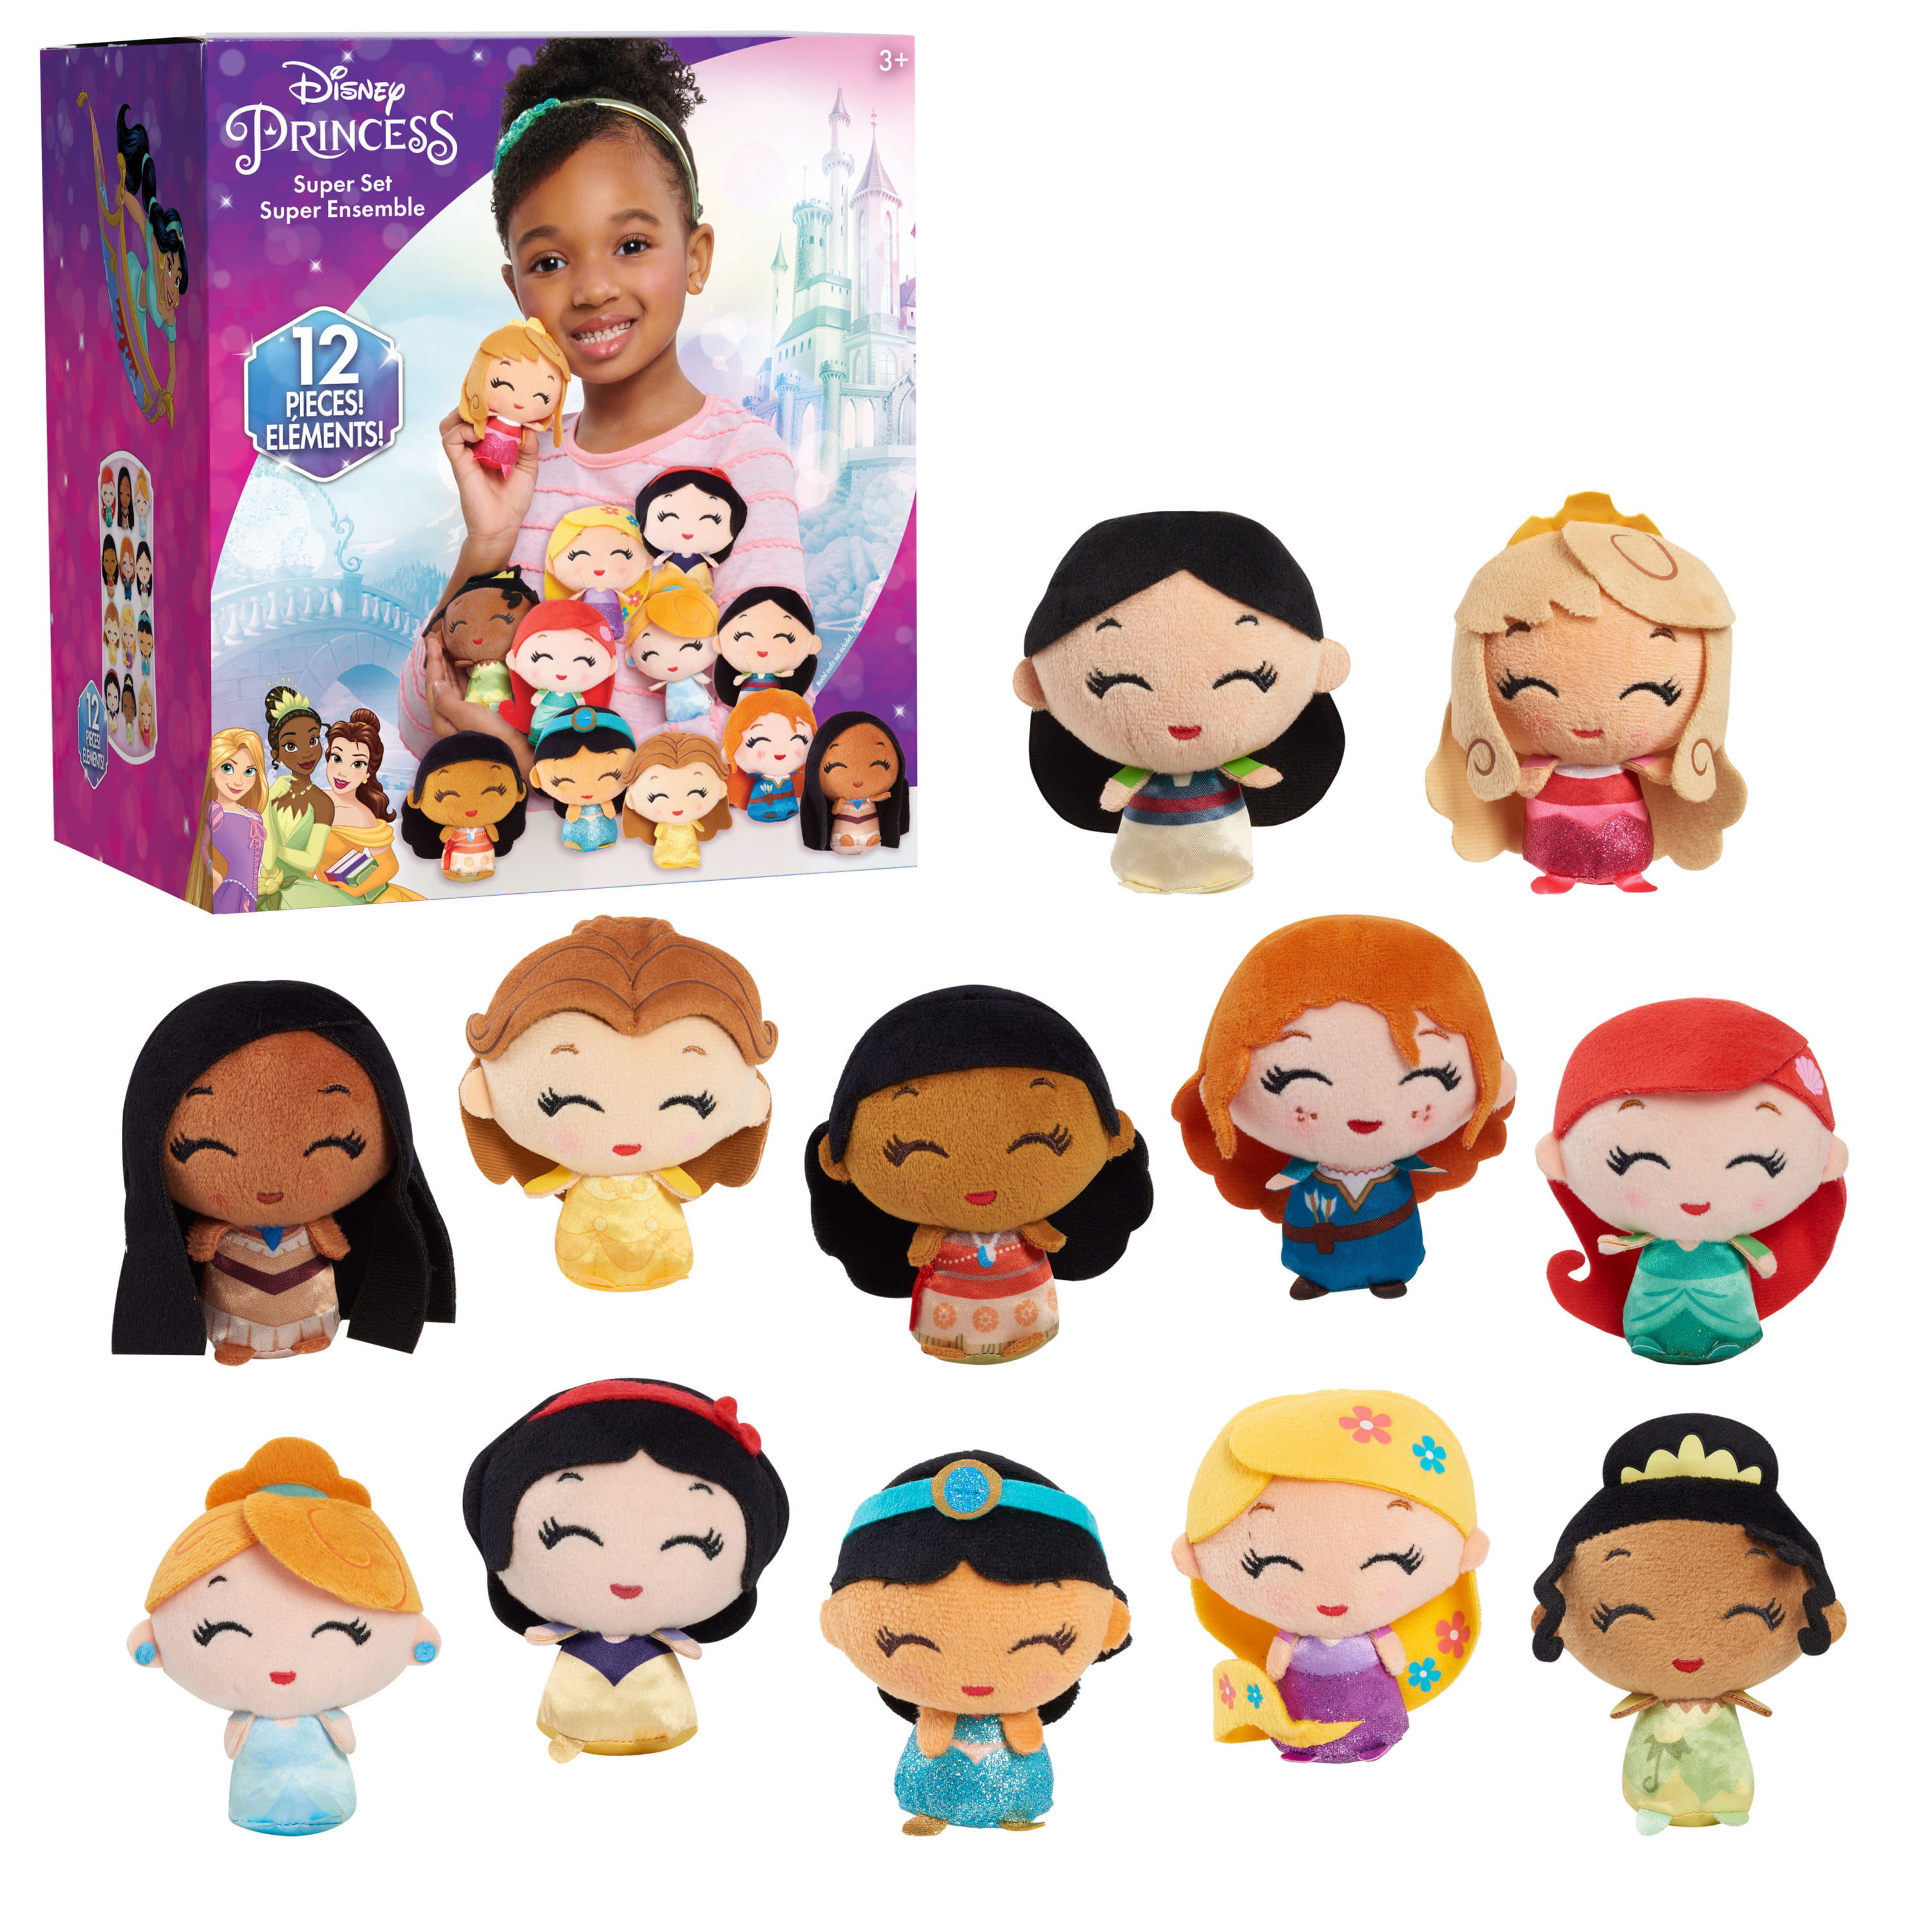 3.5" 12-Count Disney Princess Plush Super Toy Set $28.71 + Free Shipping w/ Walmart+ or $35+